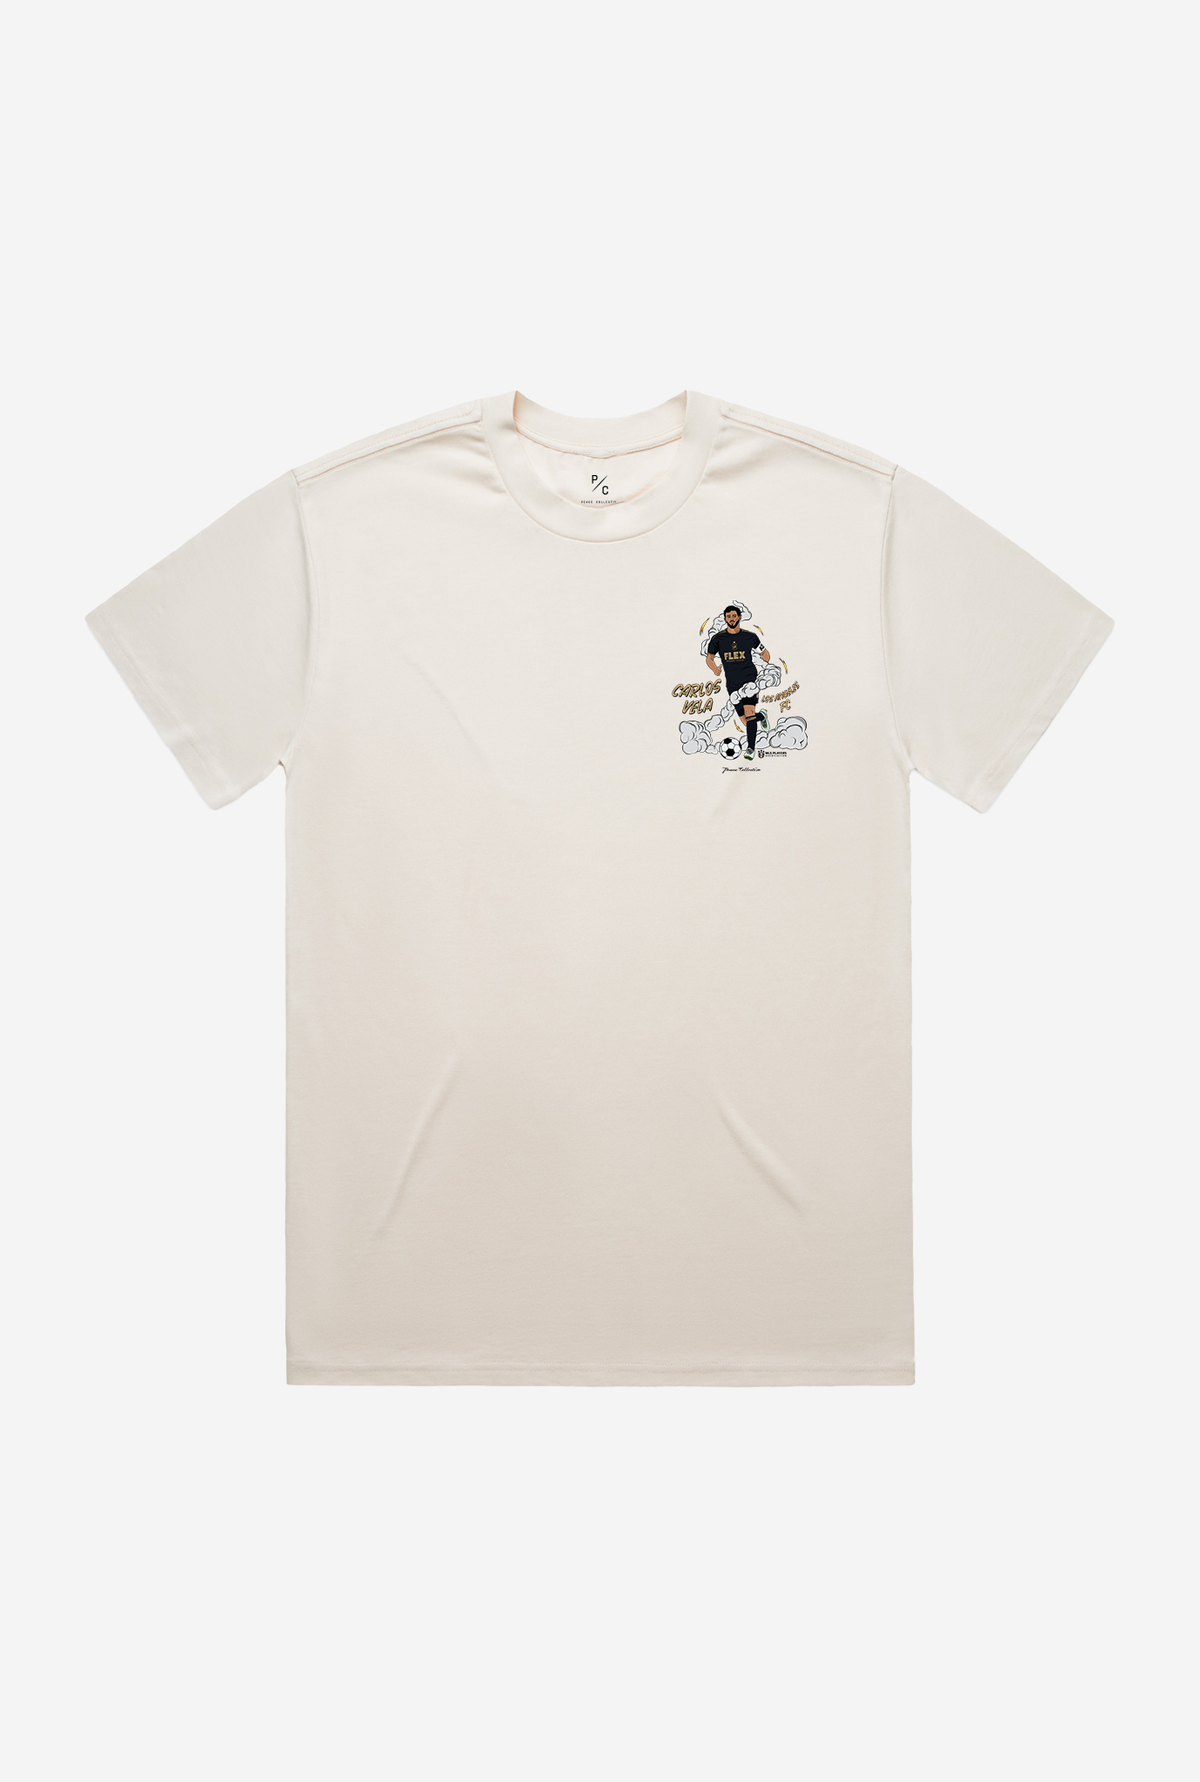 Carlos Vela Player Graphic Premium T-Shirt - Ivory